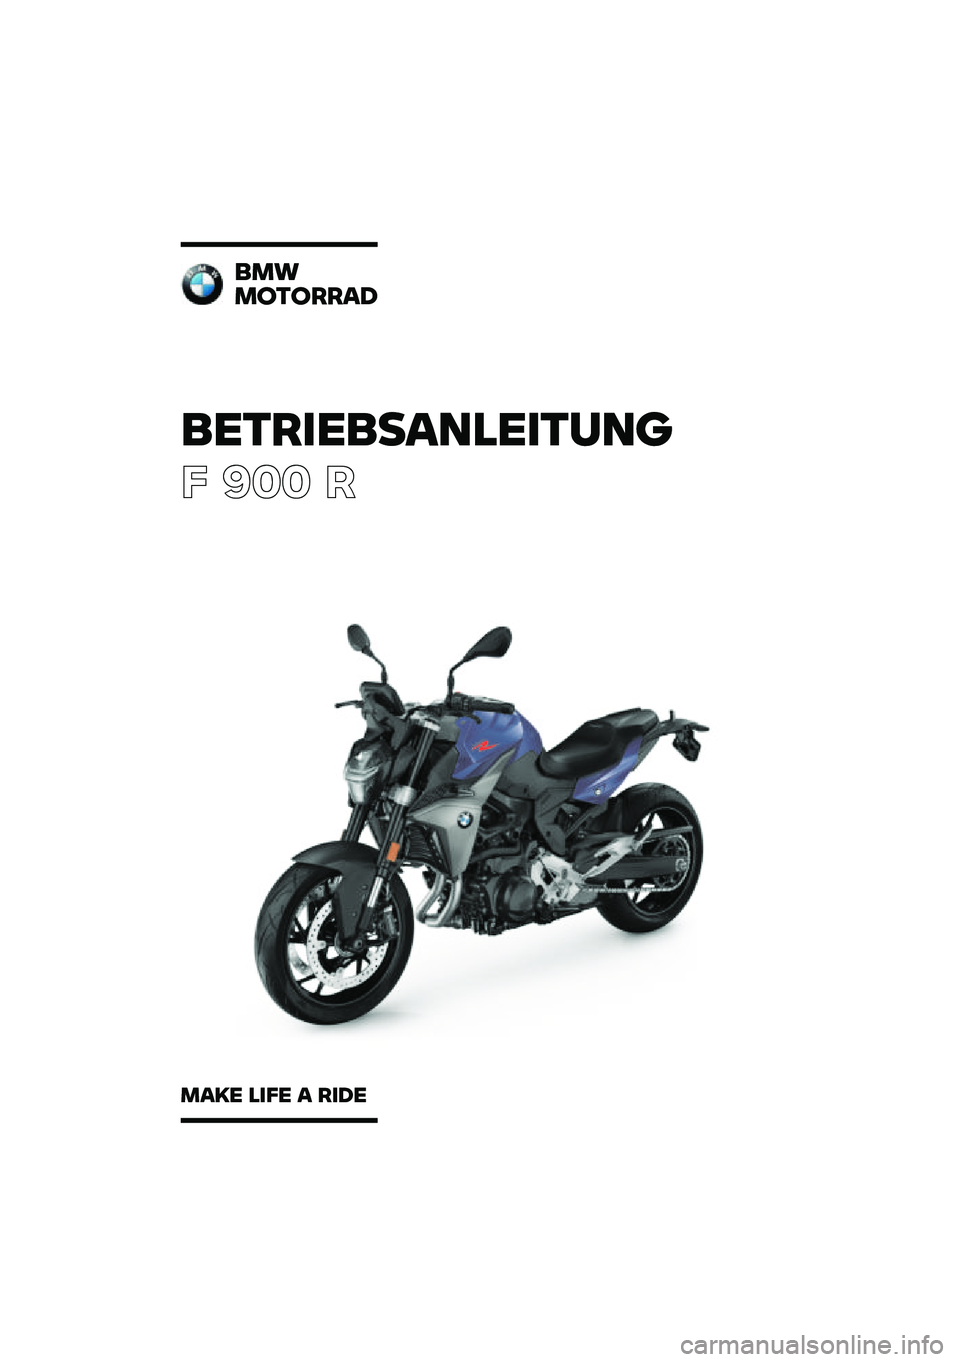 BMW MOTORRAD F 900 R 2020  Betriebsanleitung (in German) 